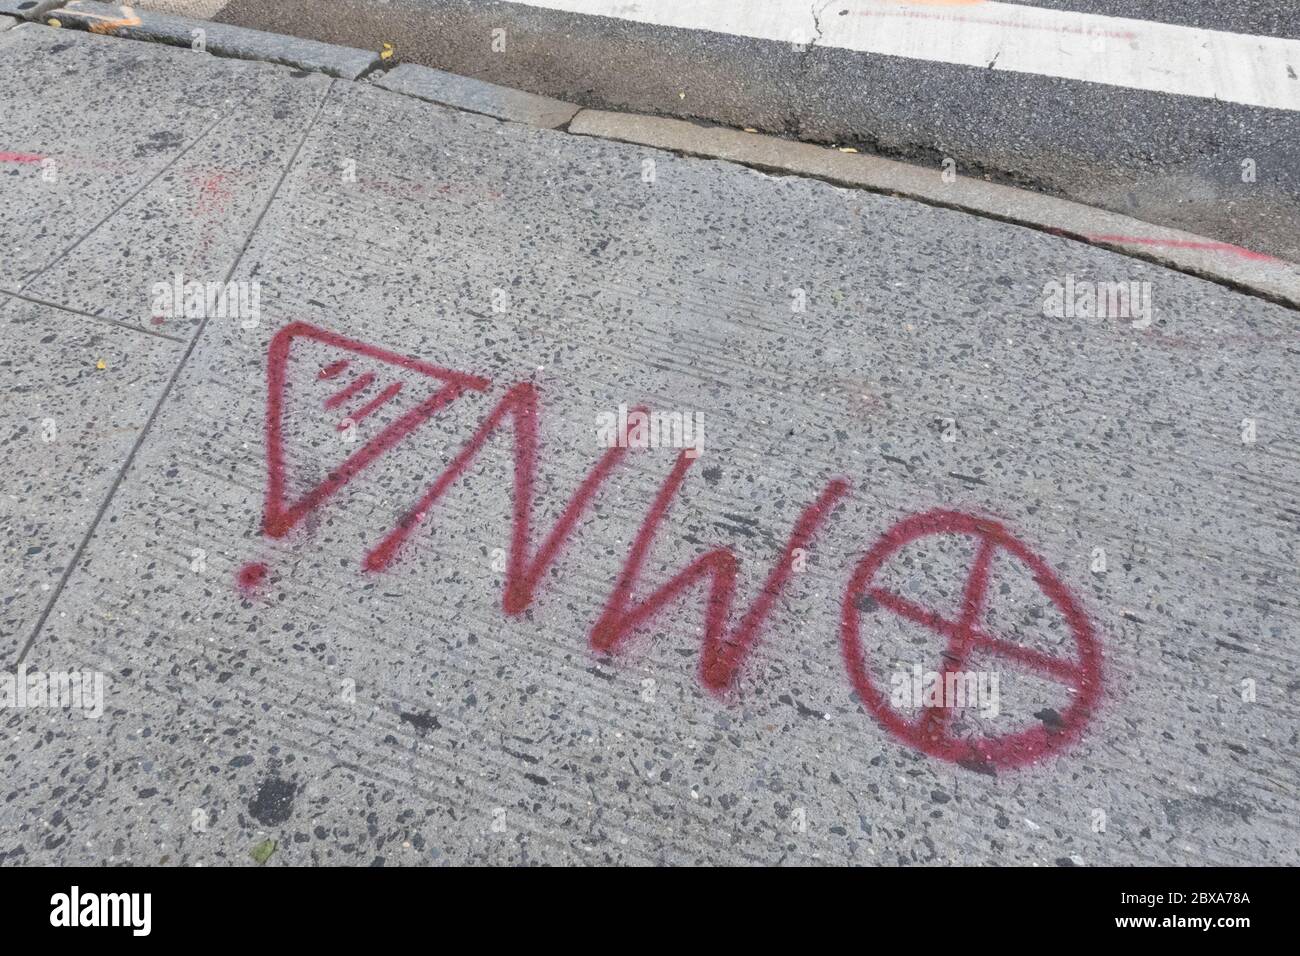 New World Order graffiti painted on a New York City sidewalk, USA Stock Photo